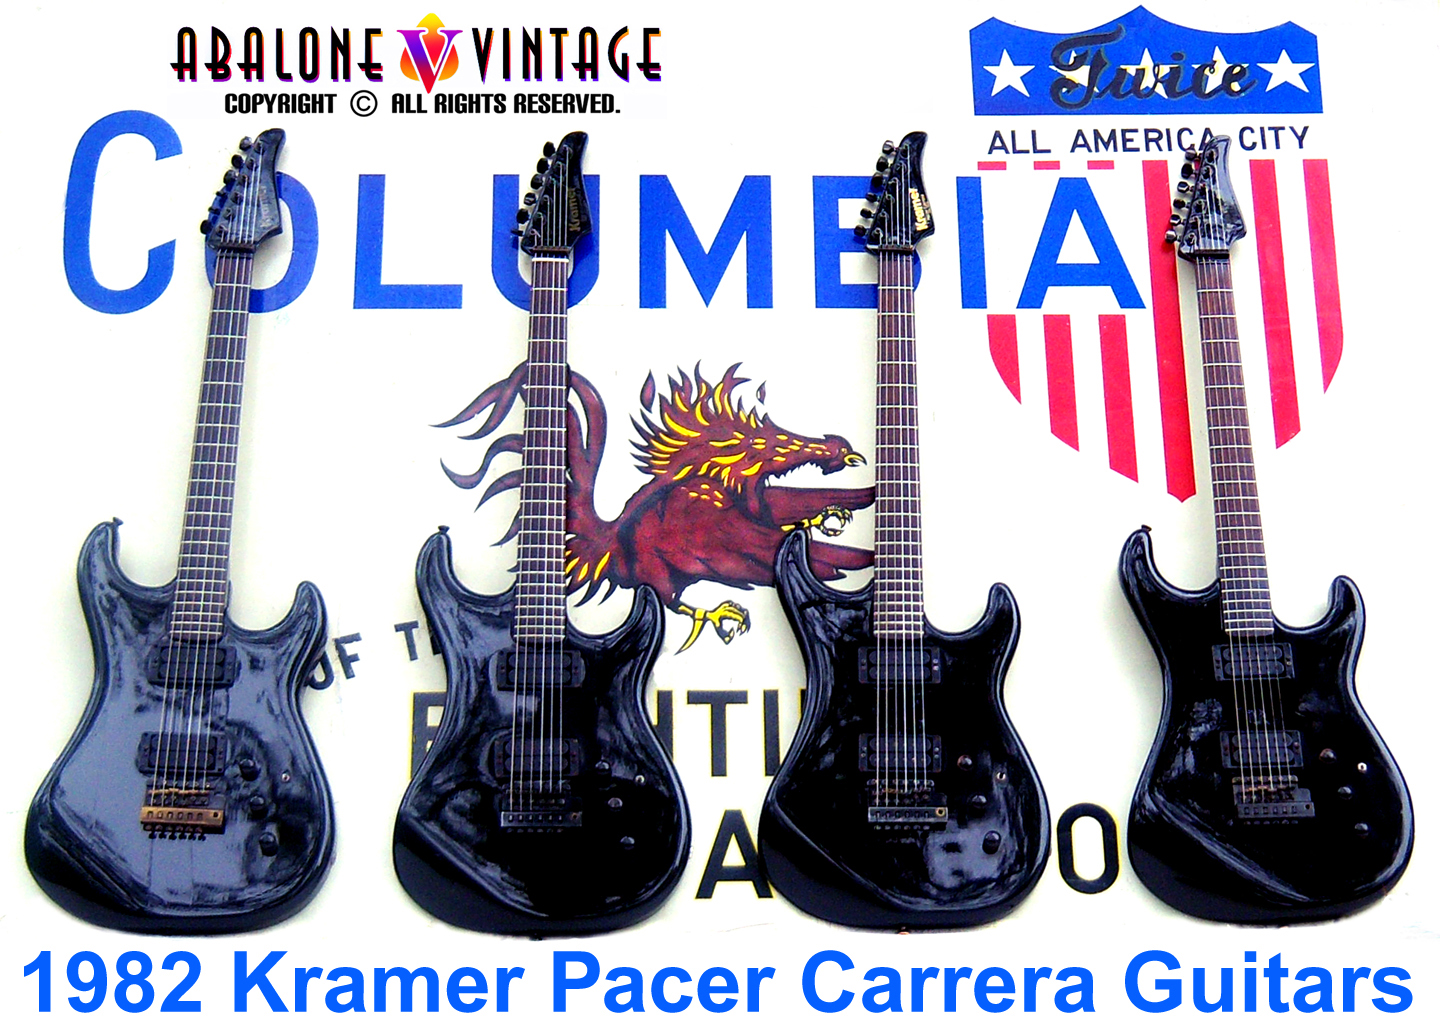 Kramer Pacer Carrera guitars